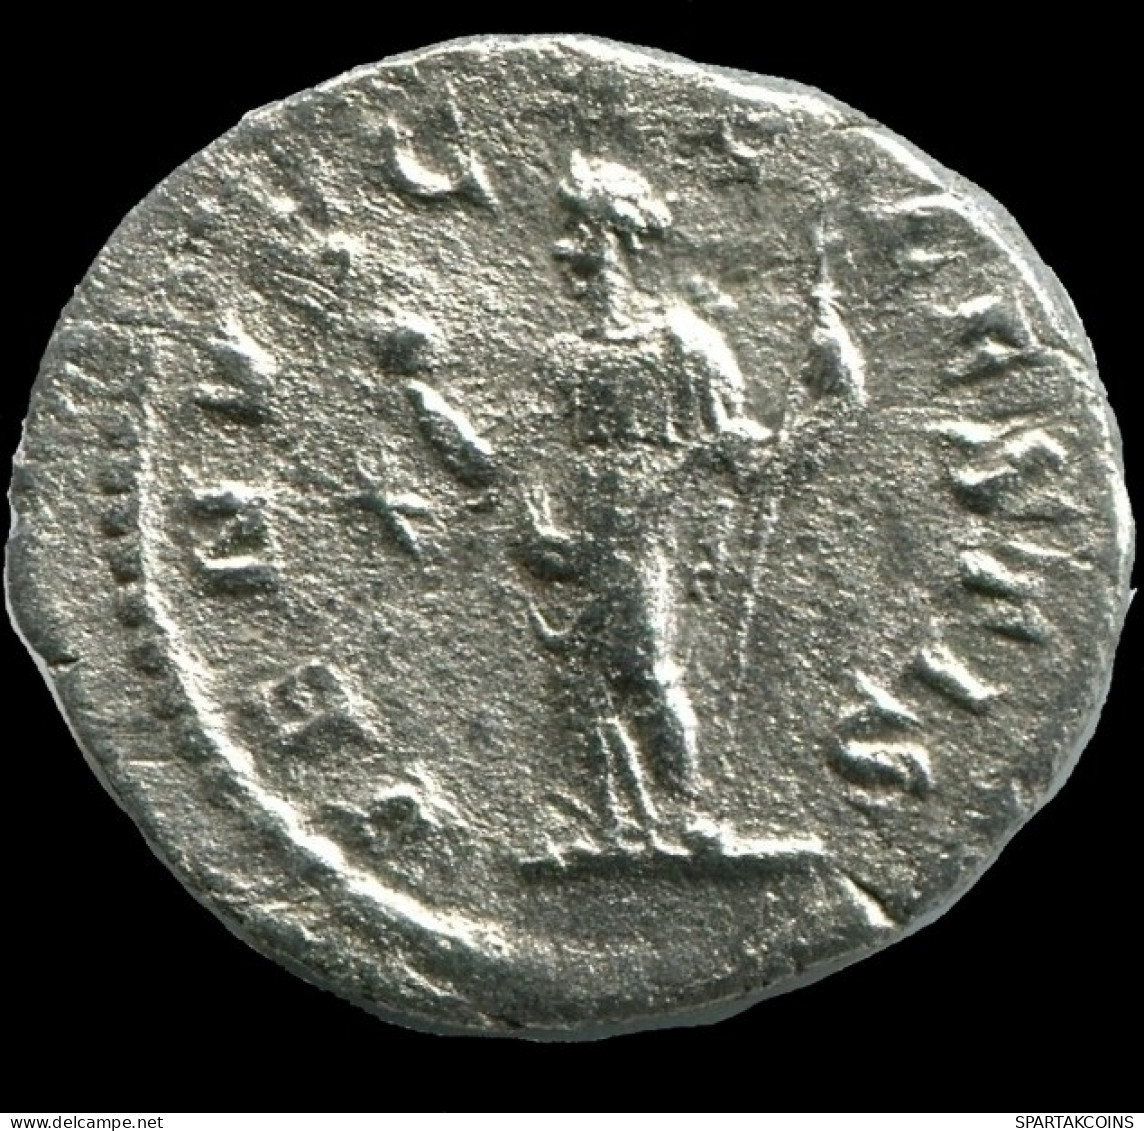 JULIA SOAEMIAS AR DENARIUS AD 218 - 222 VENVS CAELESTIS - VENUS #ANC12342.78.U.A - Les Sévères (193 à 235)